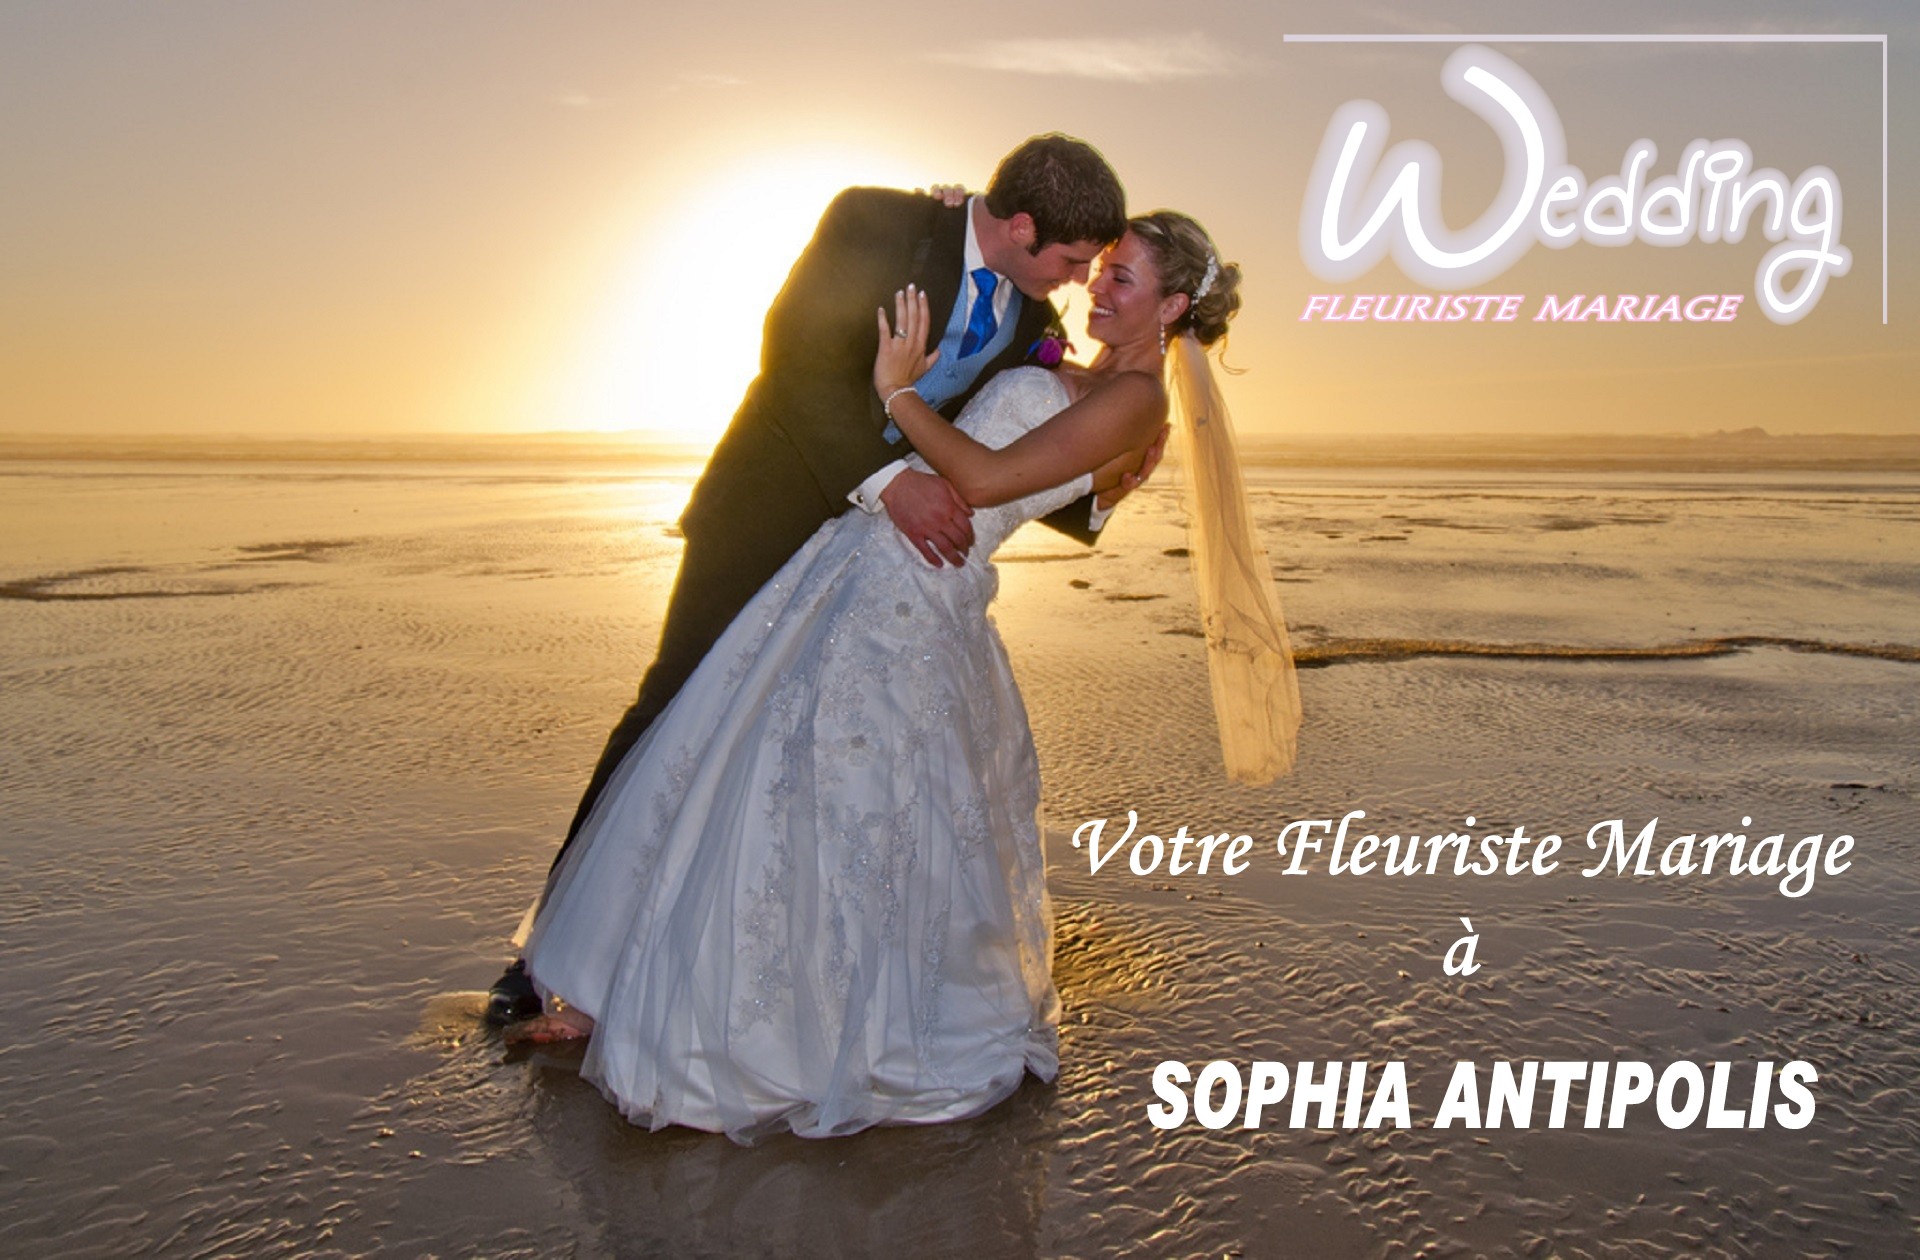 FLEURISTE MARIAGE SOPHIA ANTIPOLIS - WEDDING PLANNER SOPHIA ANTIPOLIS - TRAITEUR SOPHIA ANTIPOLIS